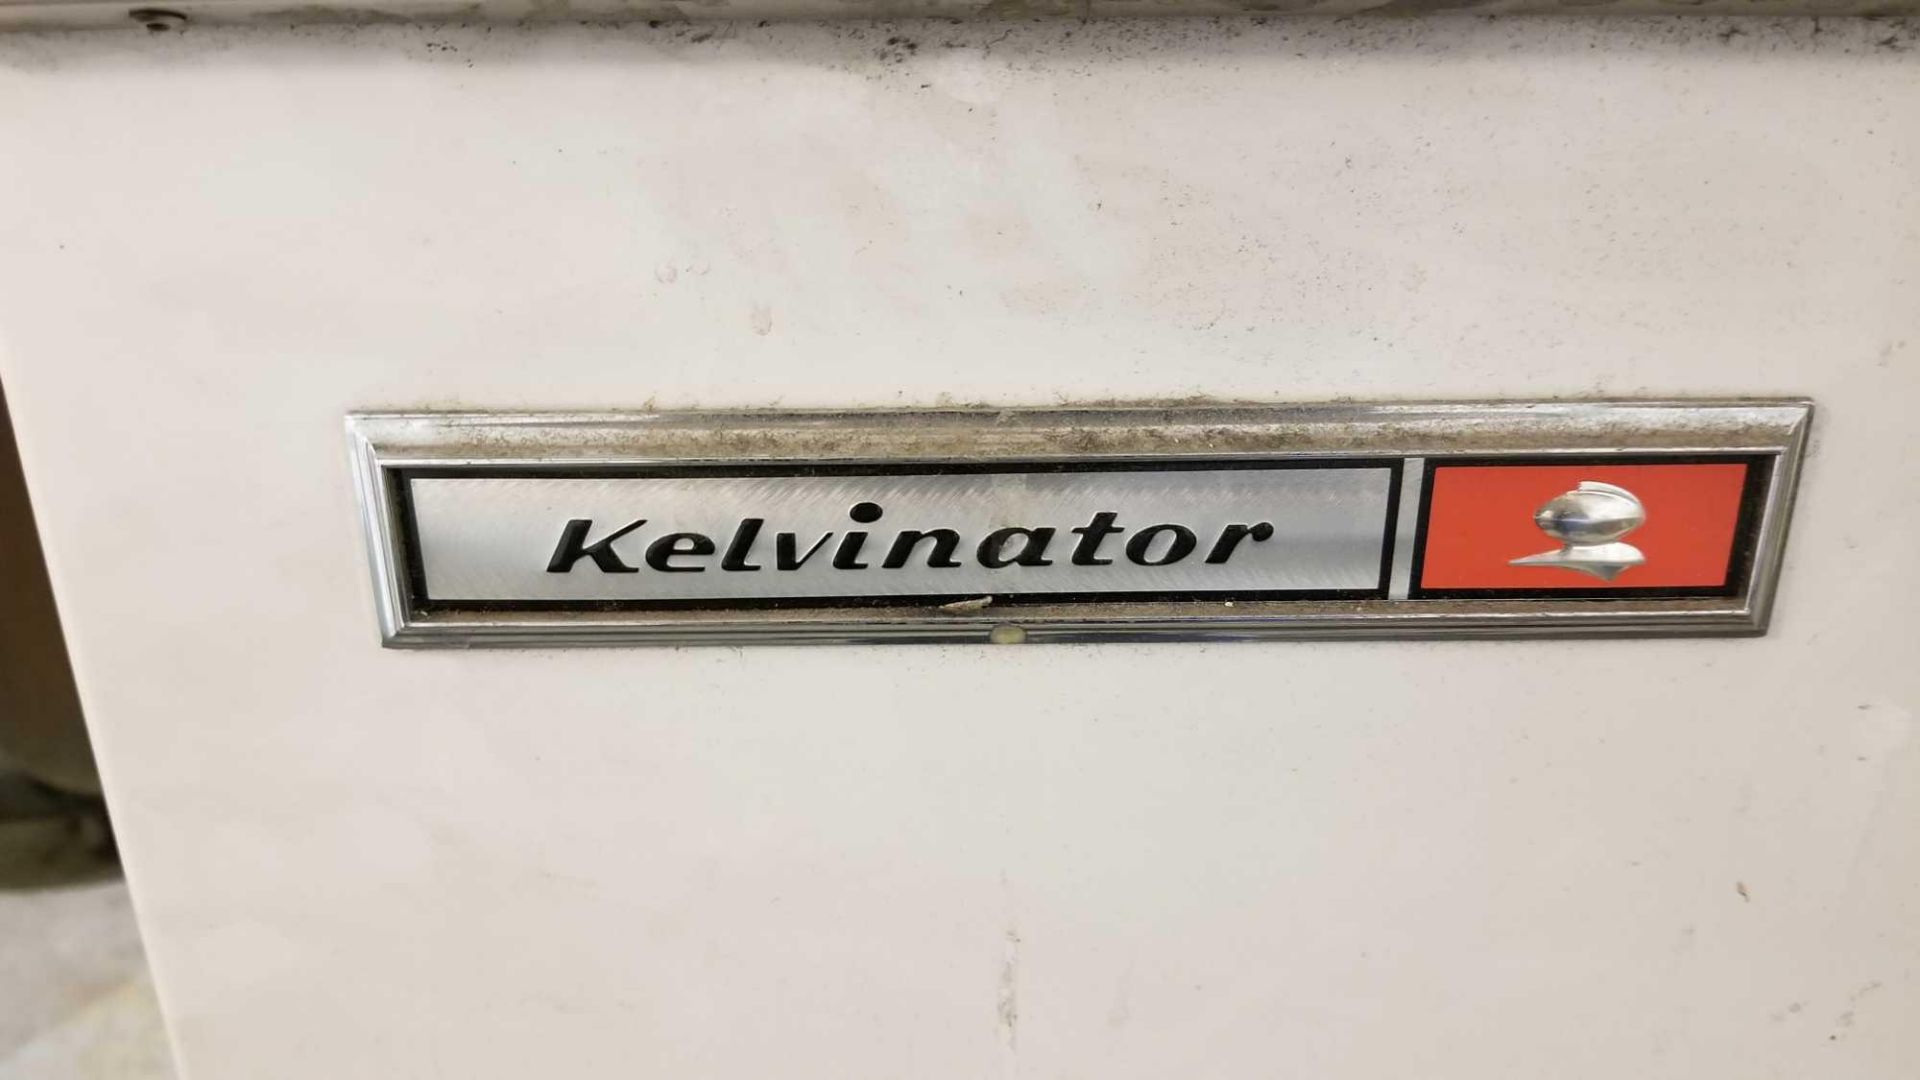 Kelvinator - Ice cream / Dipping Freezer - Image 2 of 2